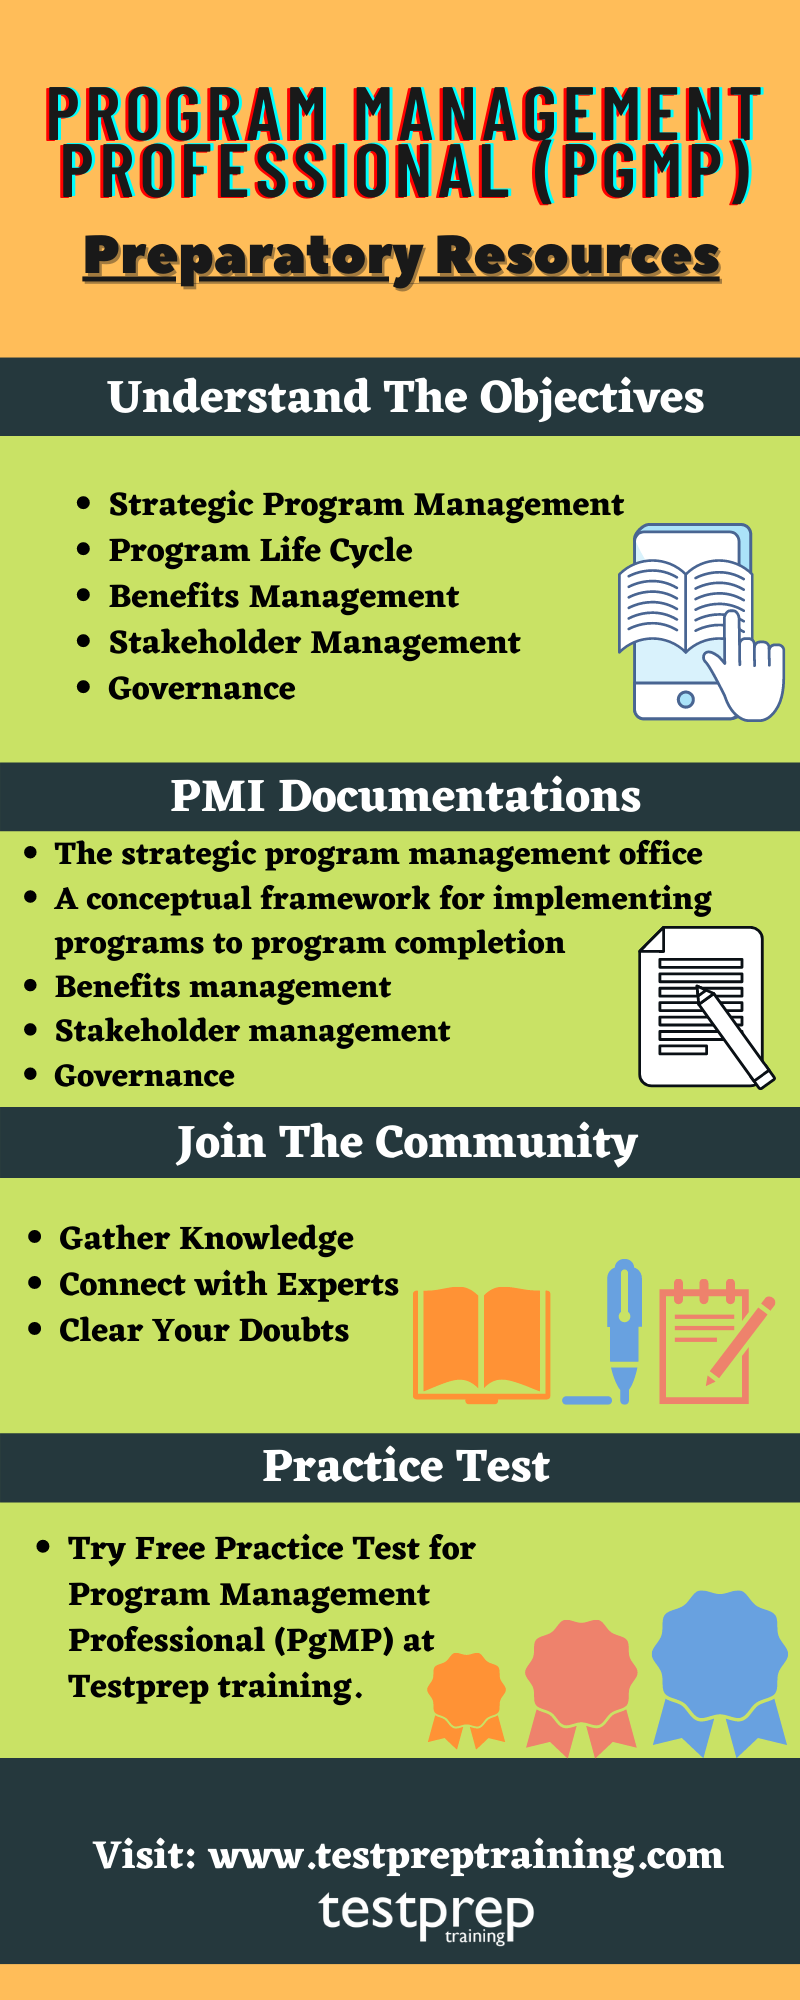 Program Management Professional (PgMP) preparatory resources